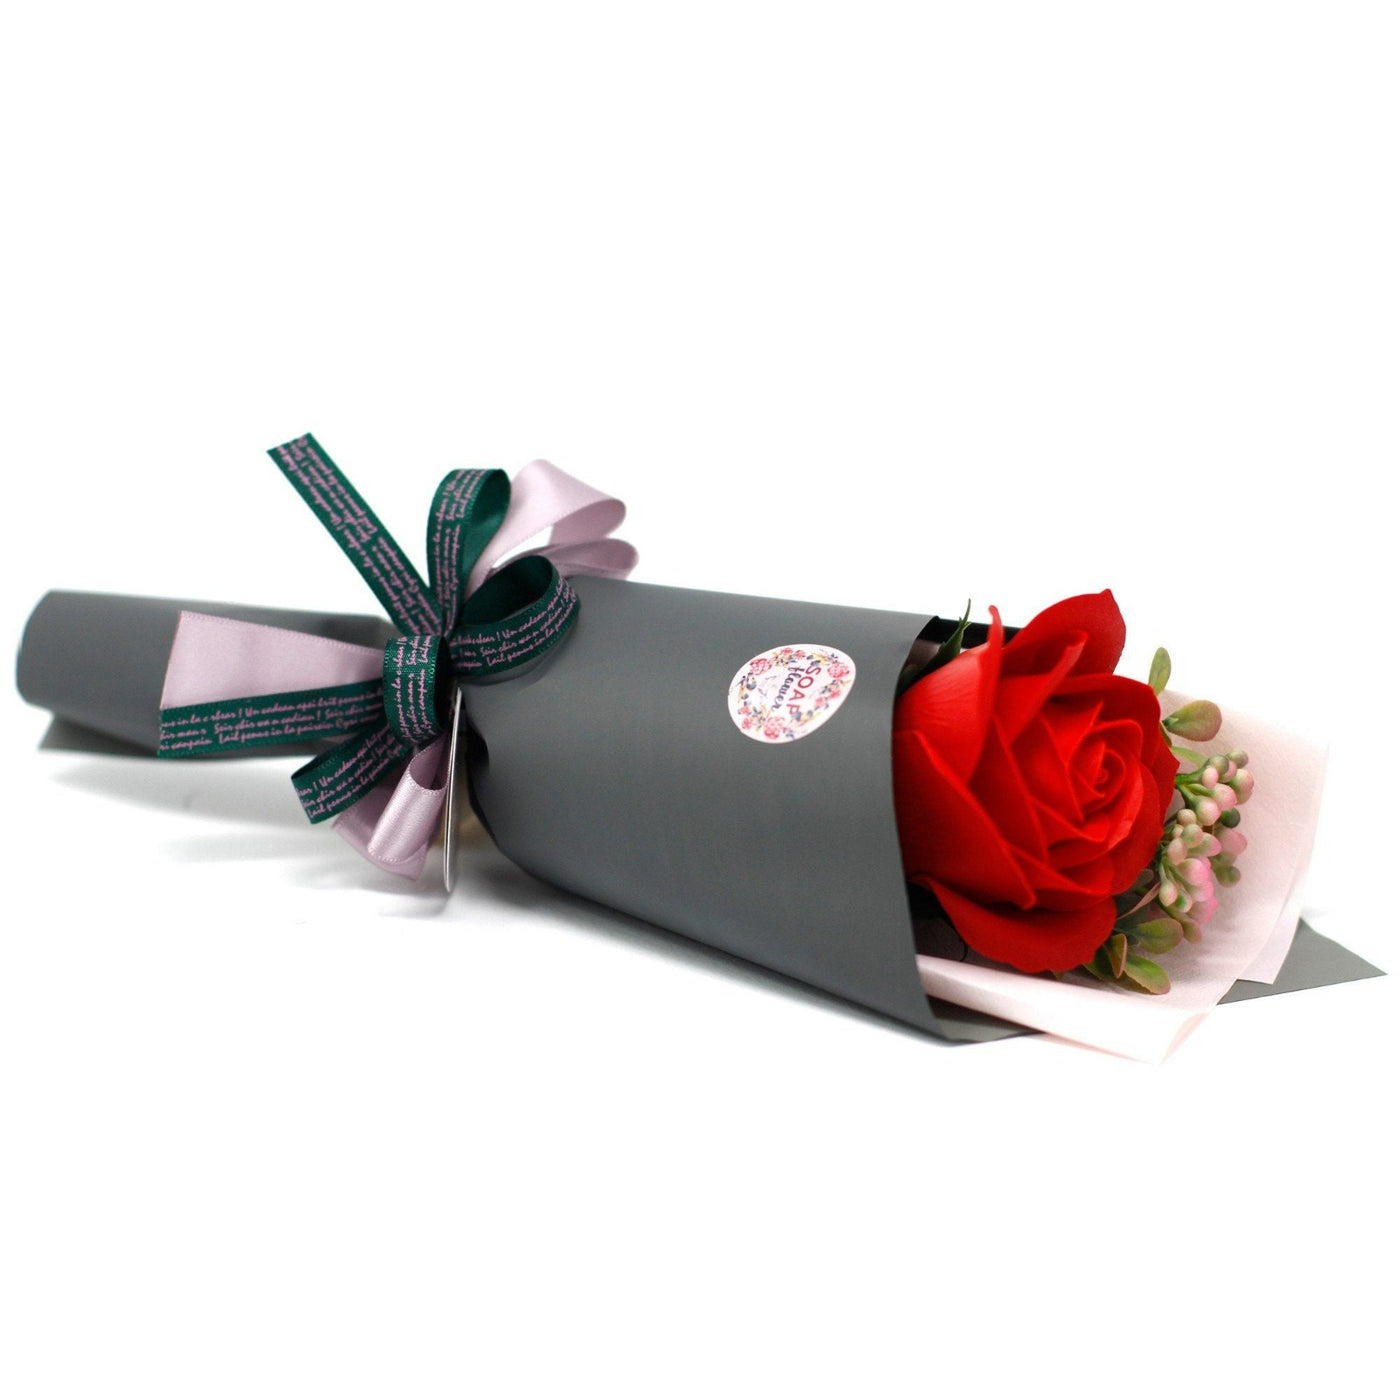 Luxury Body Soap Flower Rose Bouquet Romantic Gift Set.